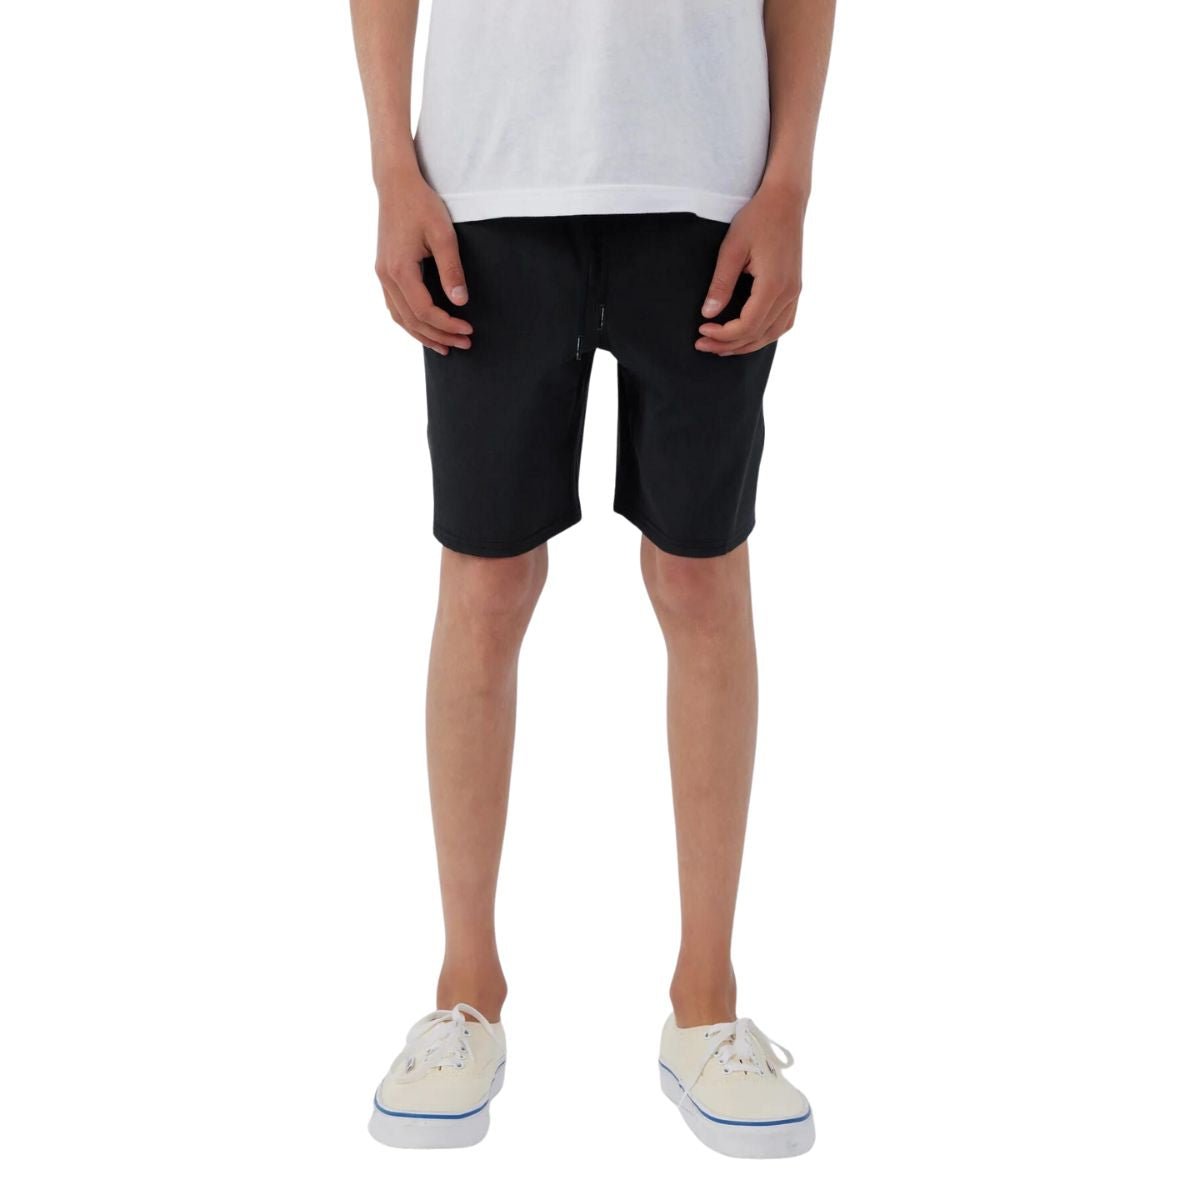 O'Neill Boys Reserve E-Waist Hybrid Shorts in Black - BoardCo